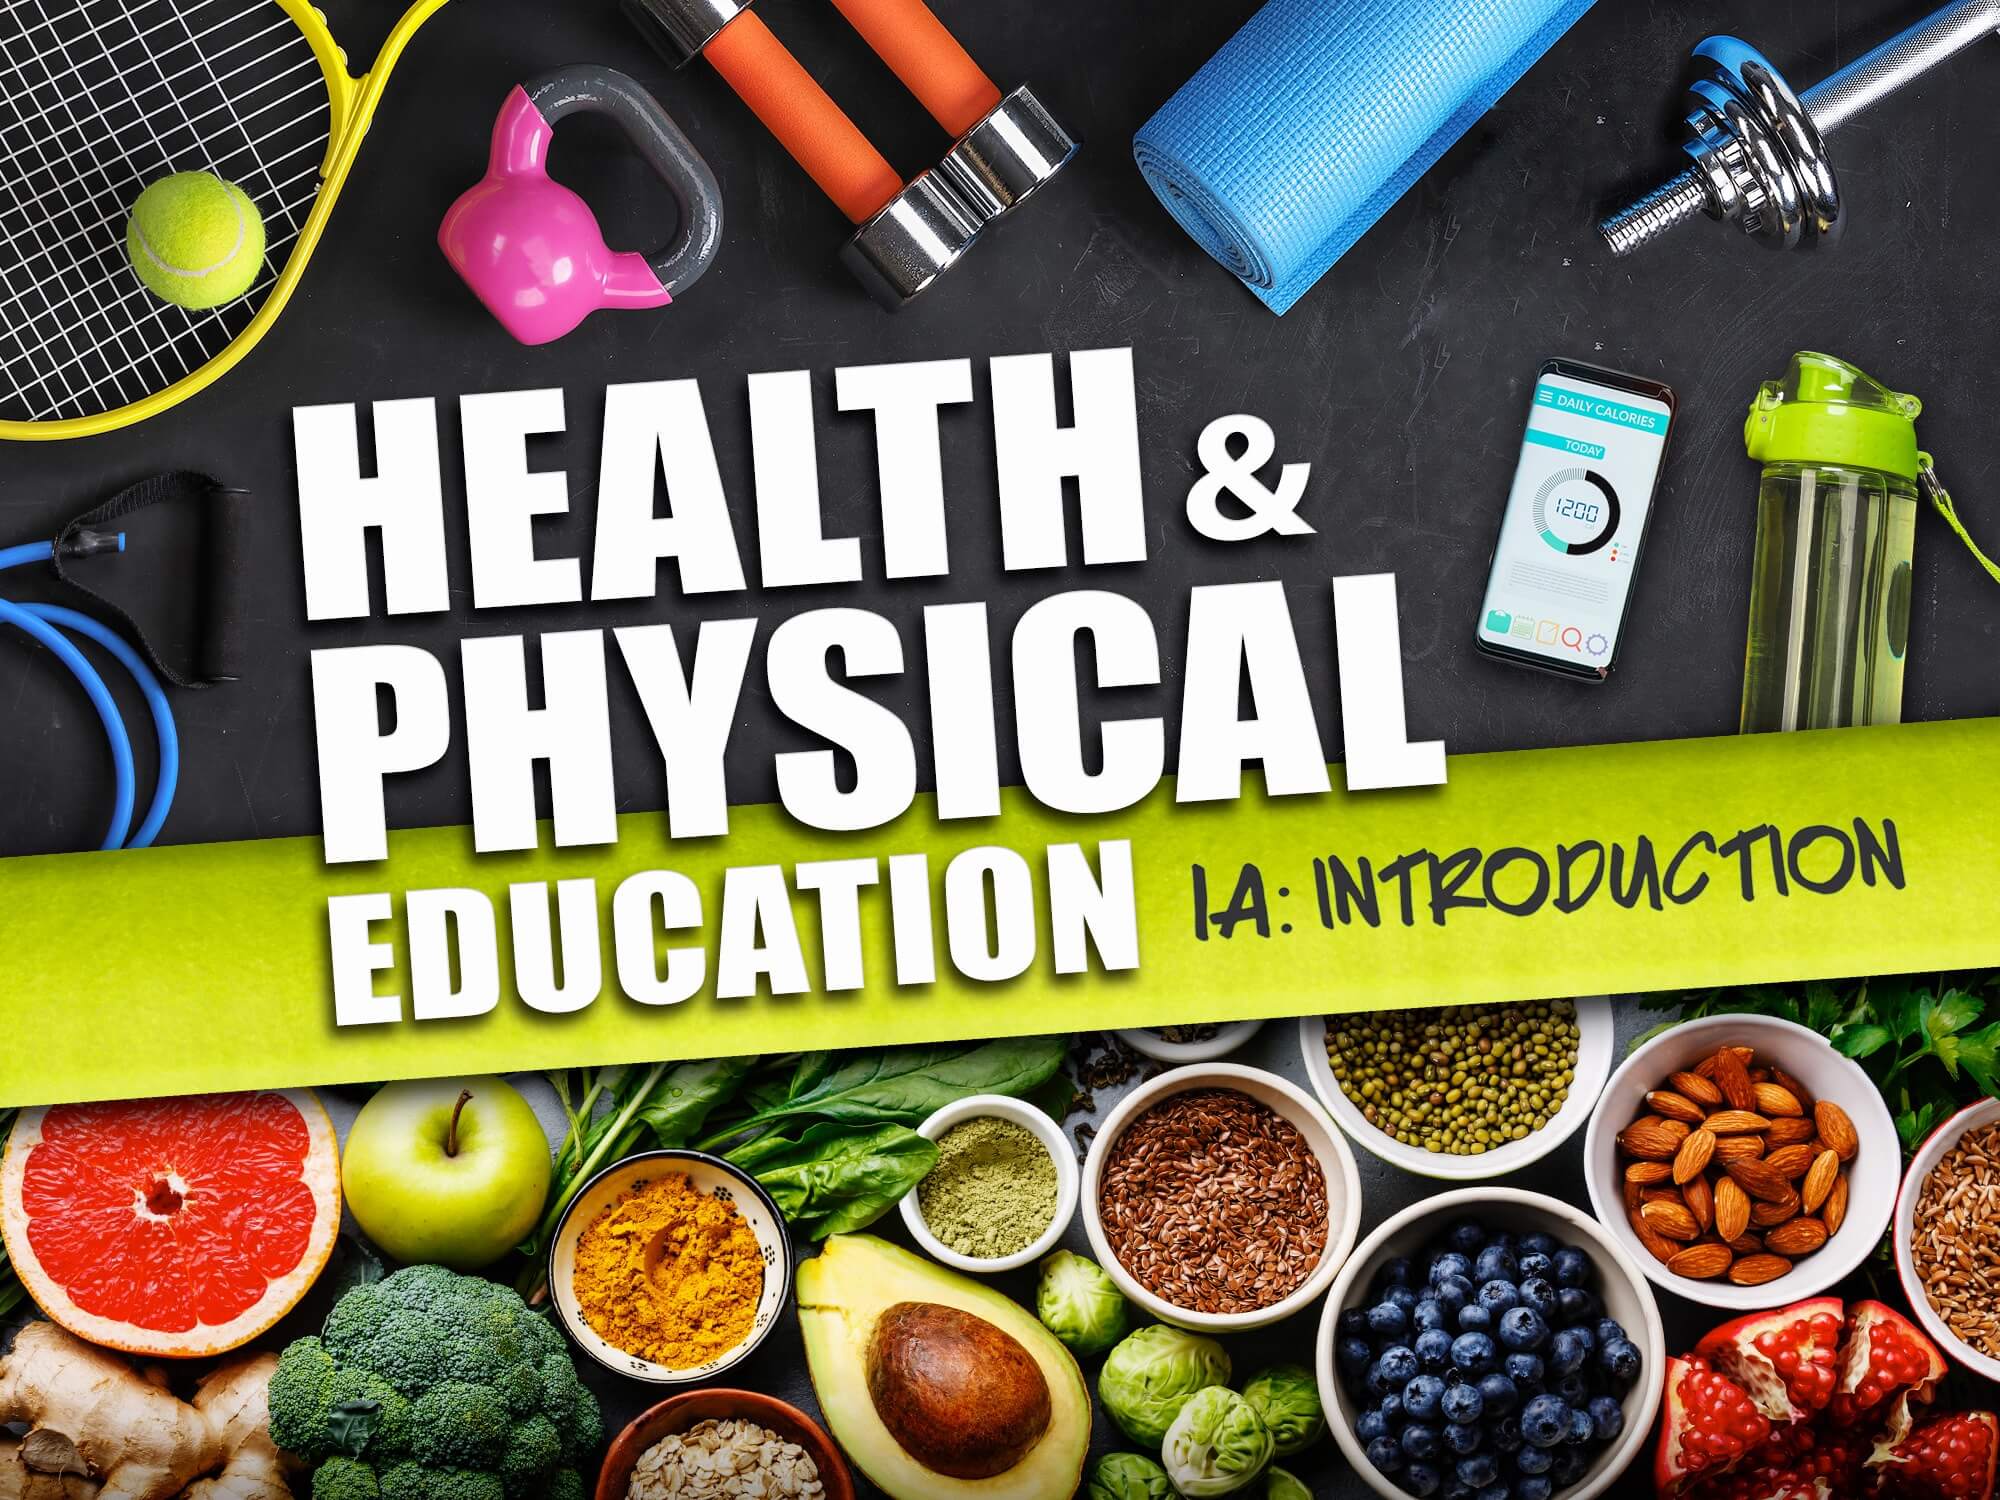 Physical Education & Health